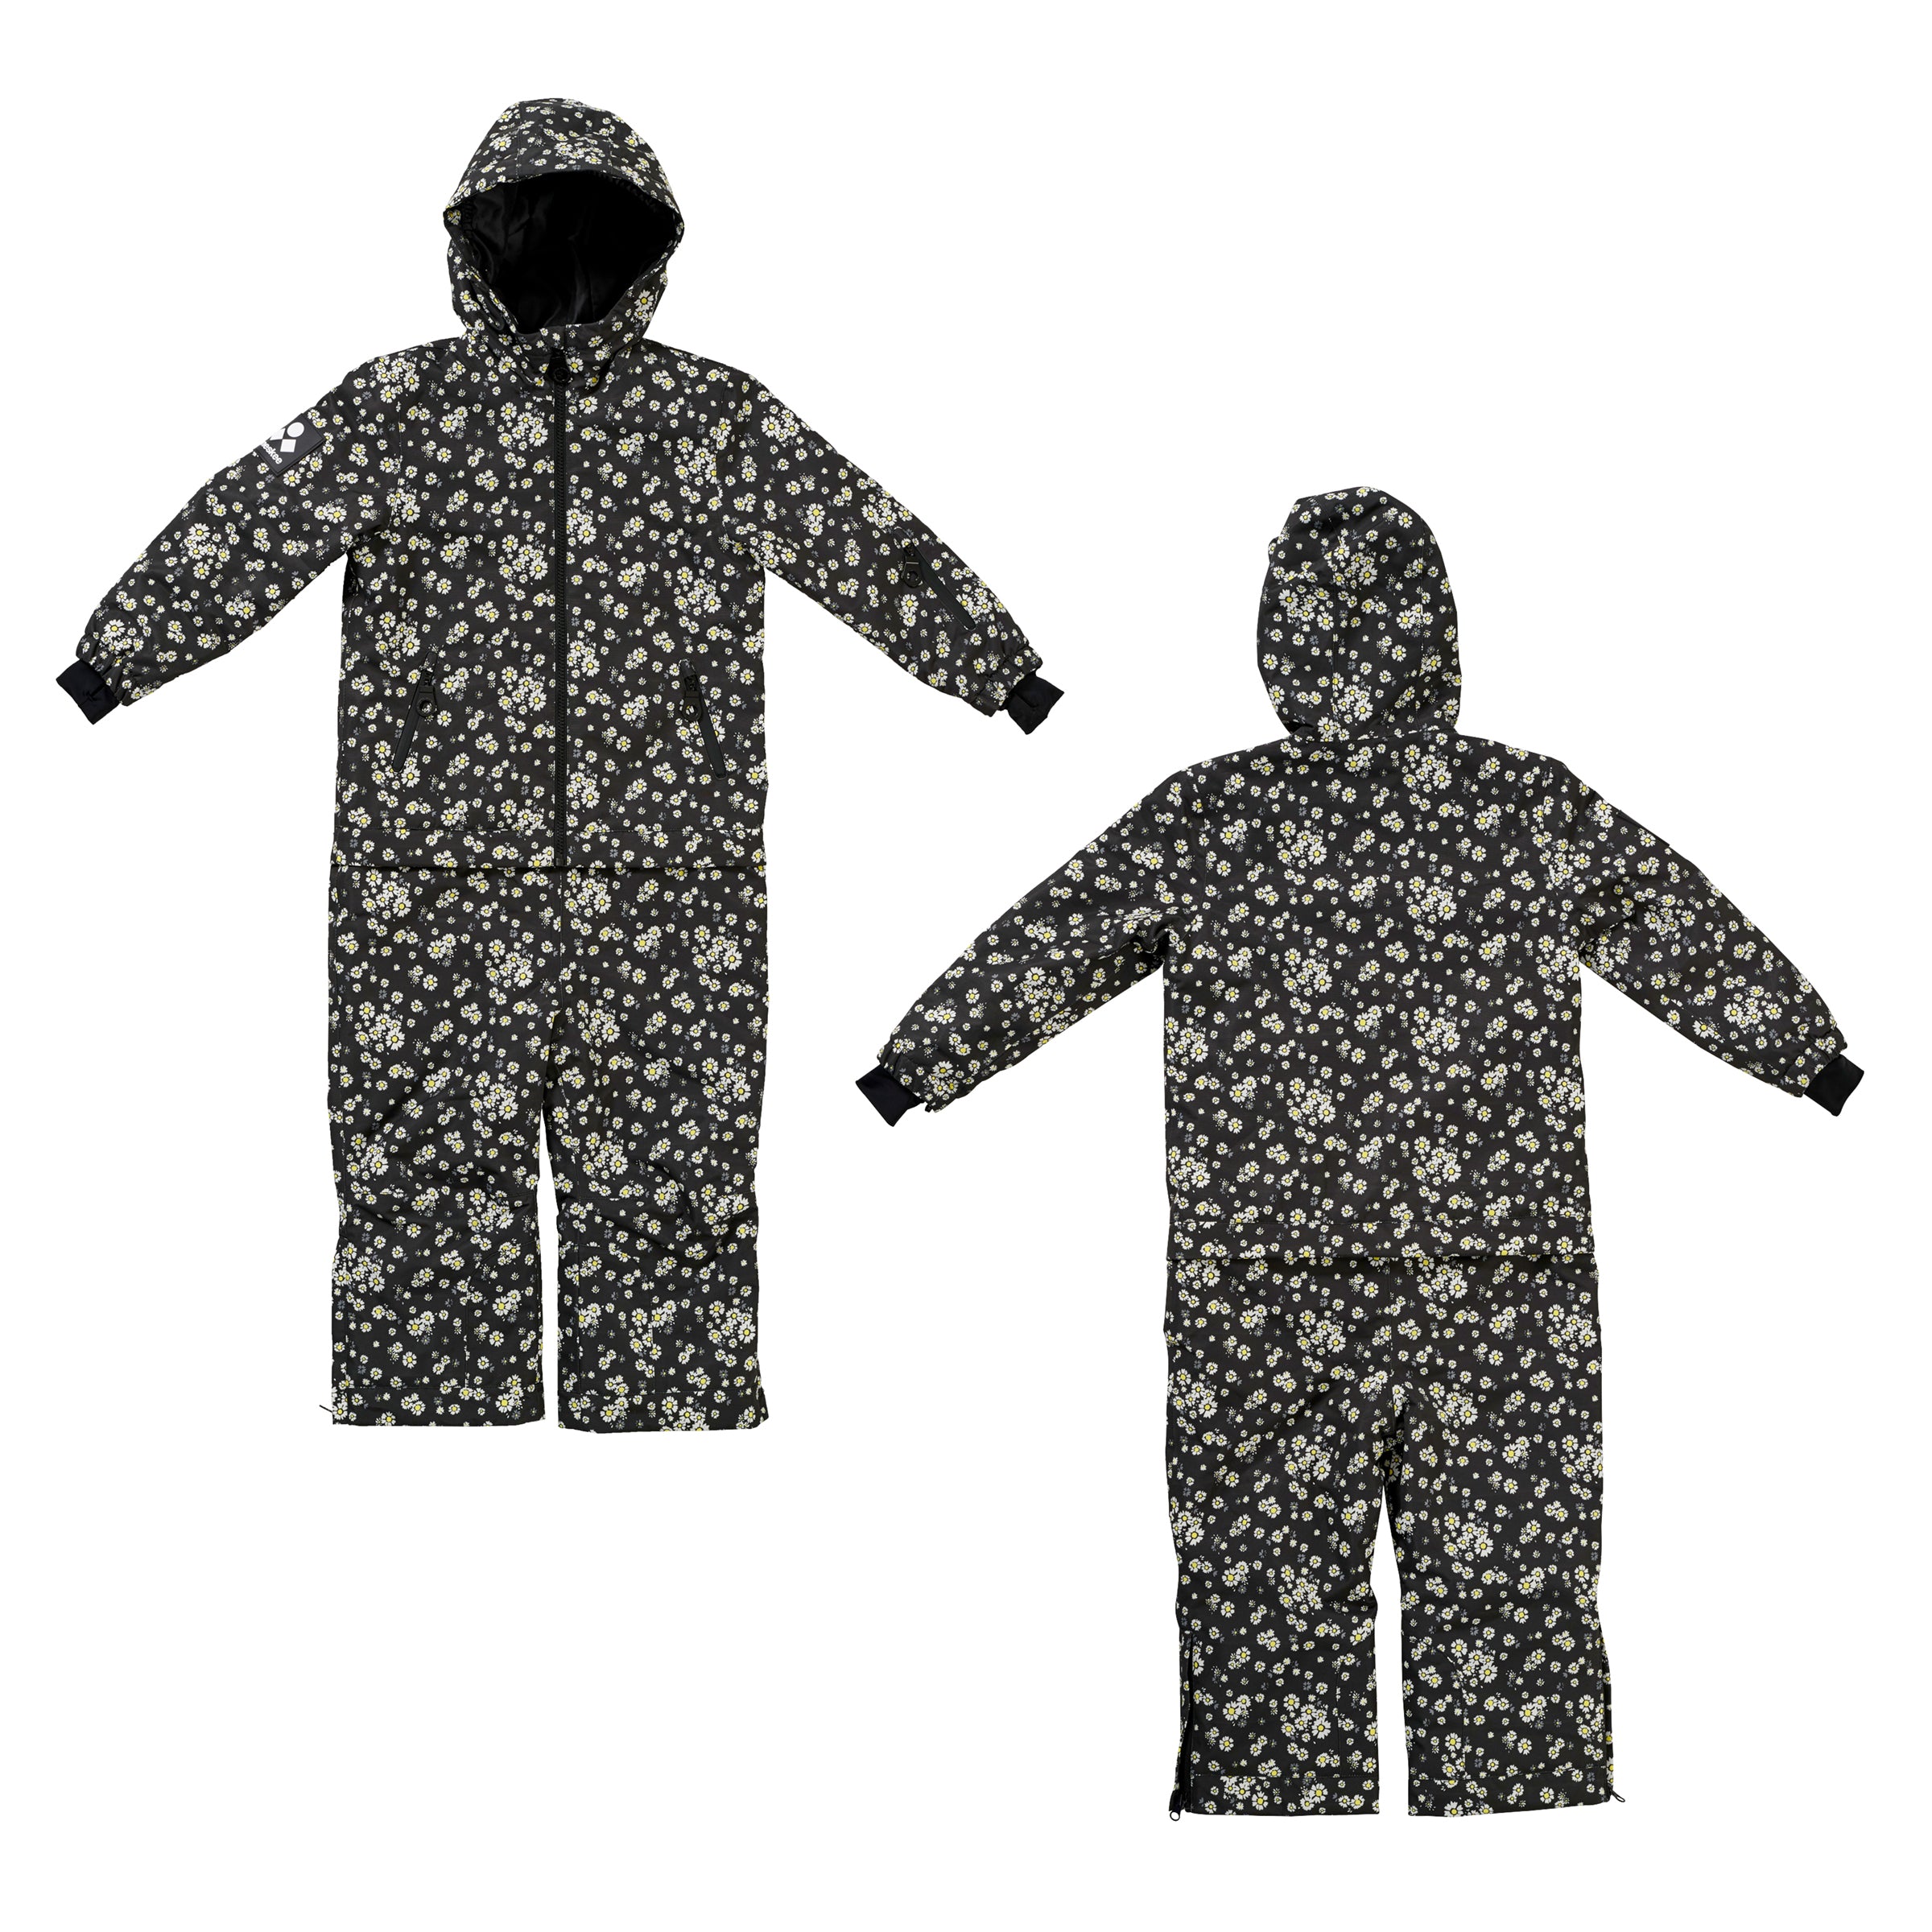 Kids 2-in-1 Snow Suit, Black Floral